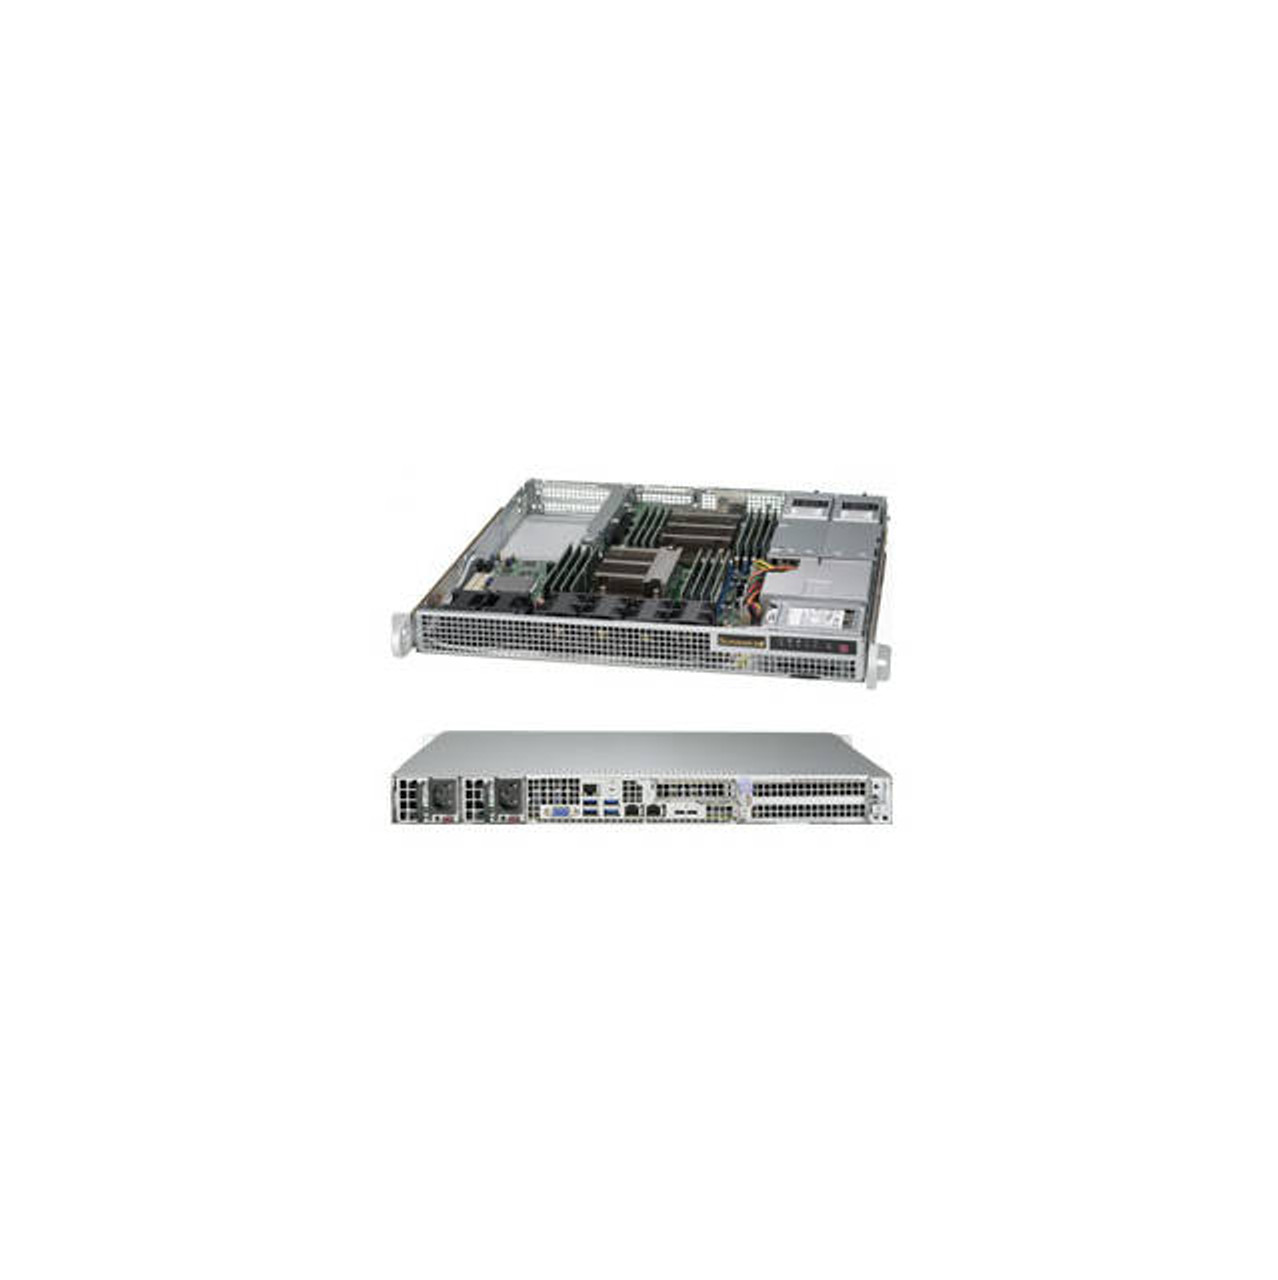 Supermicro SuperServer SYS-1028R-WMR Dual LGA2011 400W 1U Rackmount Server Barebone System